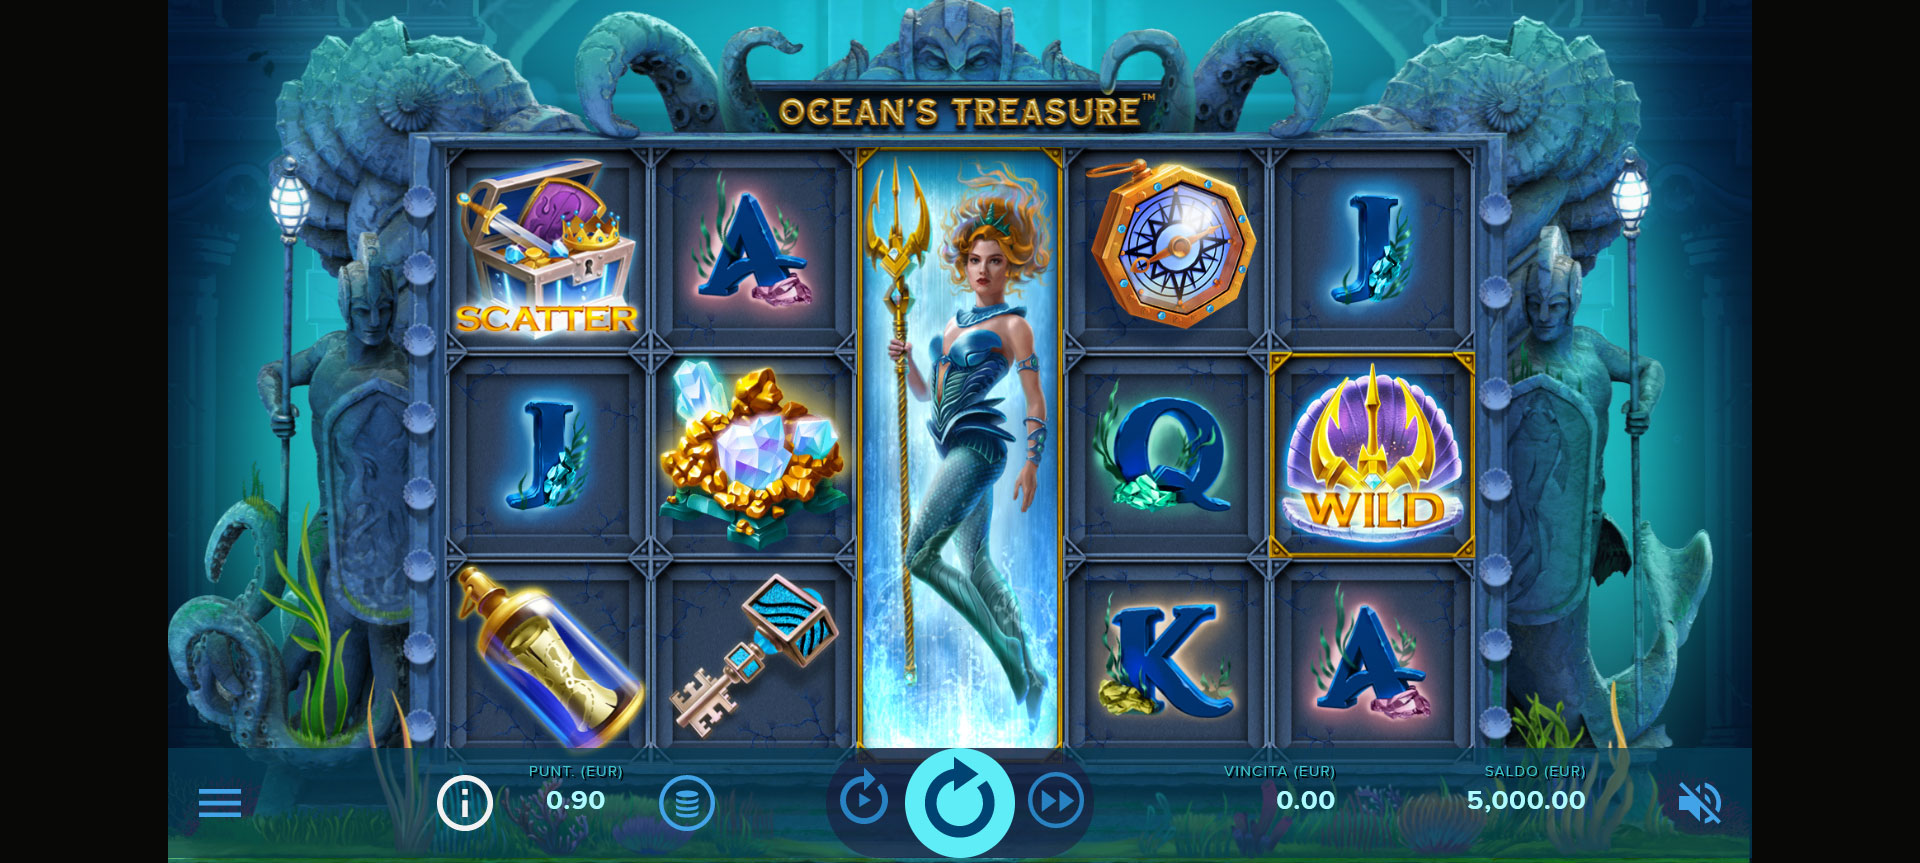 griglia del gioco slot online Ocean's Treasure